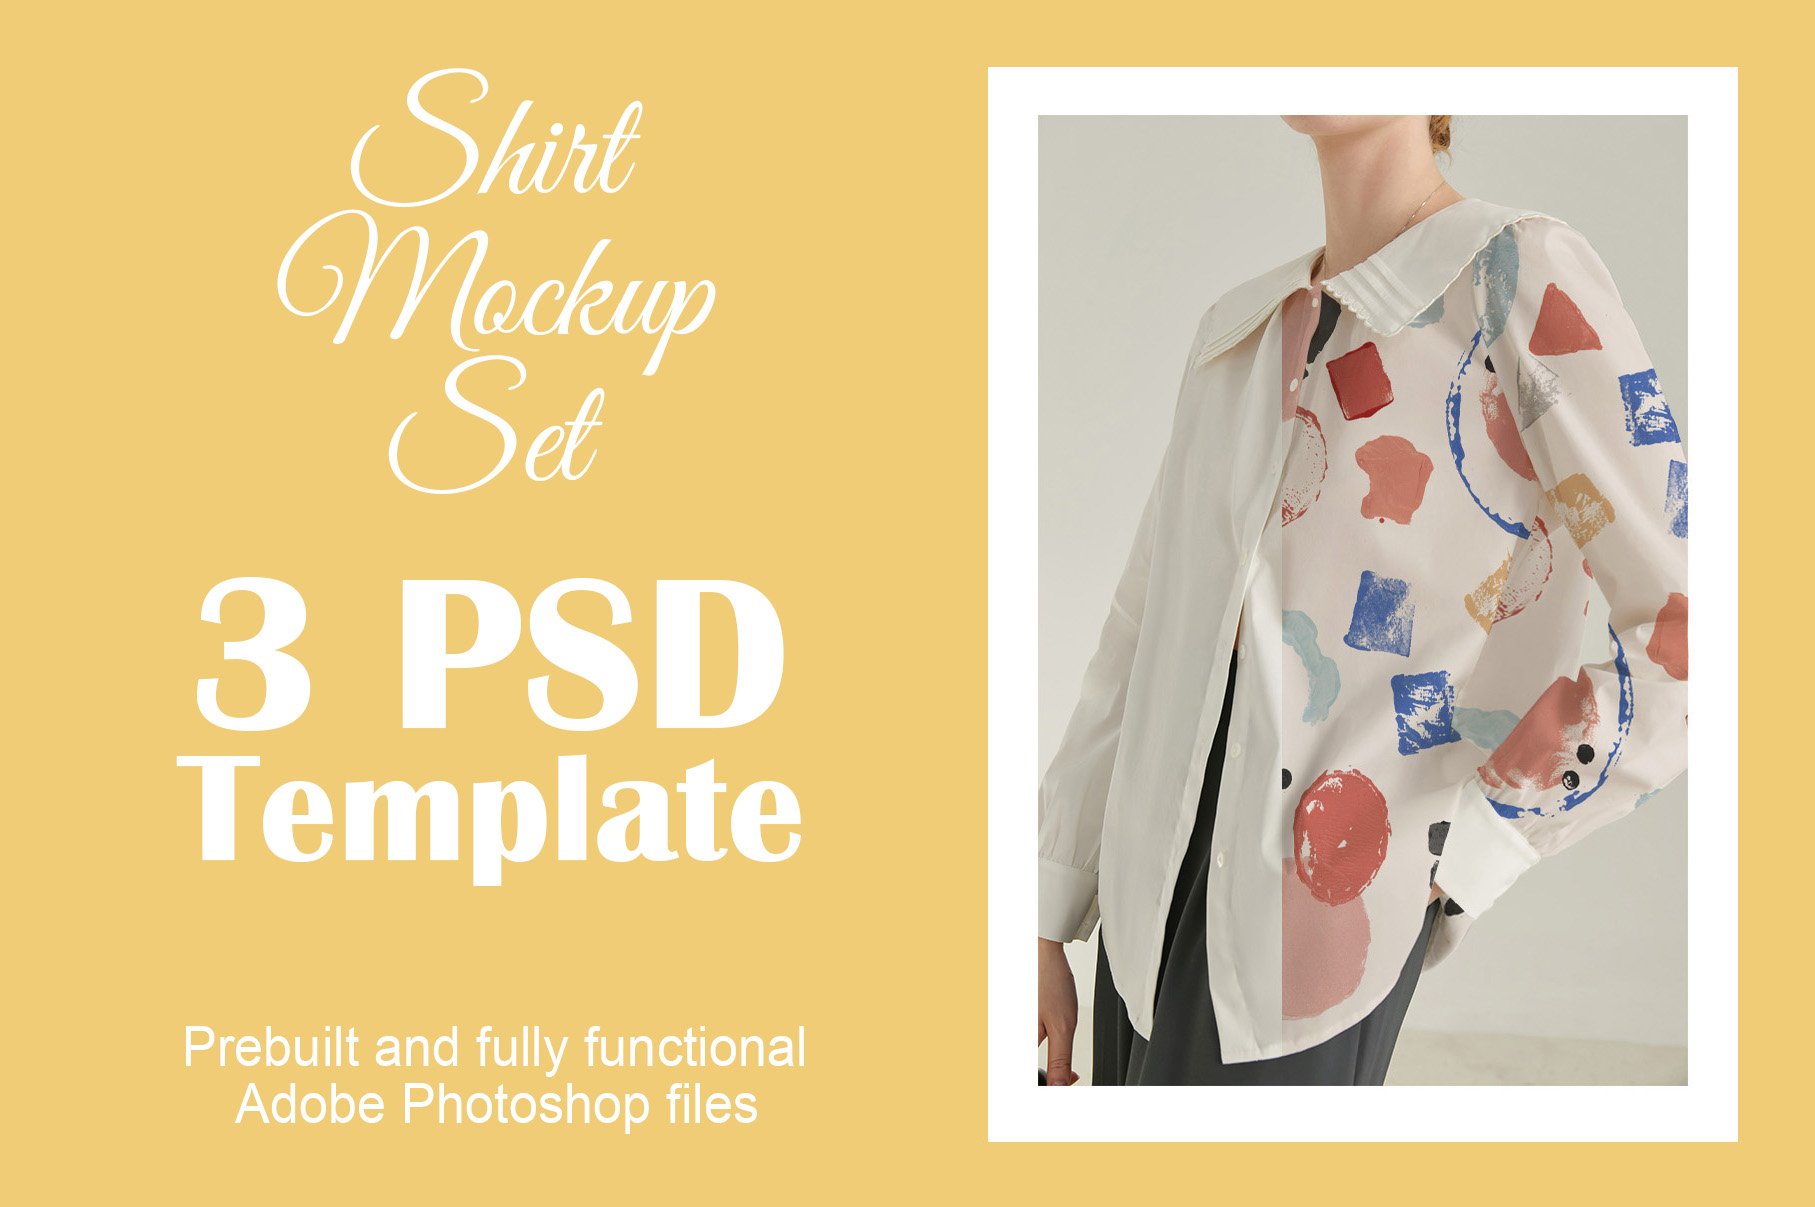 Shirt Mockup Set - 3 PSD Template cover image.